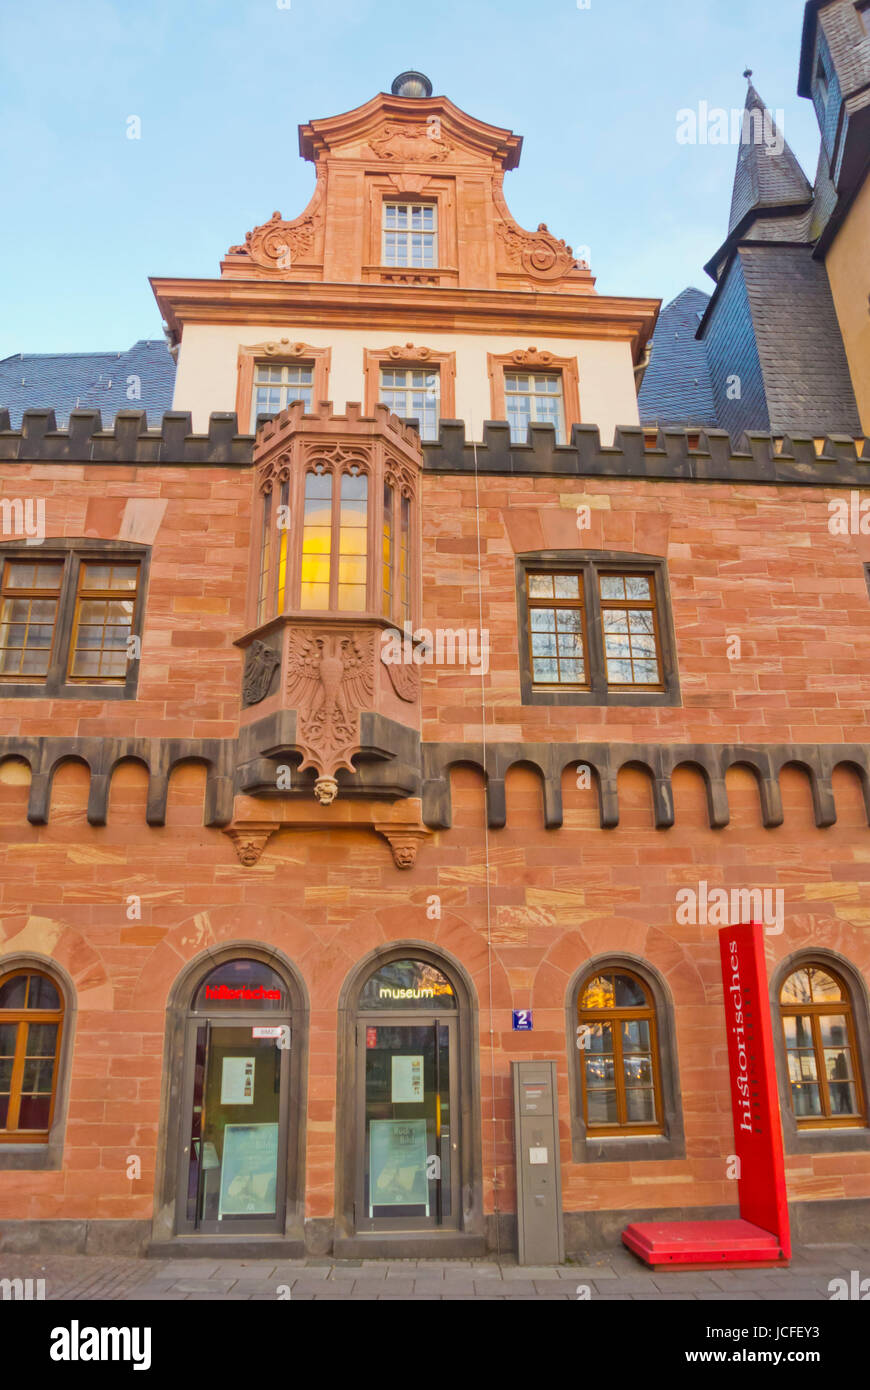 Historisches Museum, city history museum, Fahrtor, Altstadt, old town, Frankfurt am Main, Hesse, Germany Stock Photo